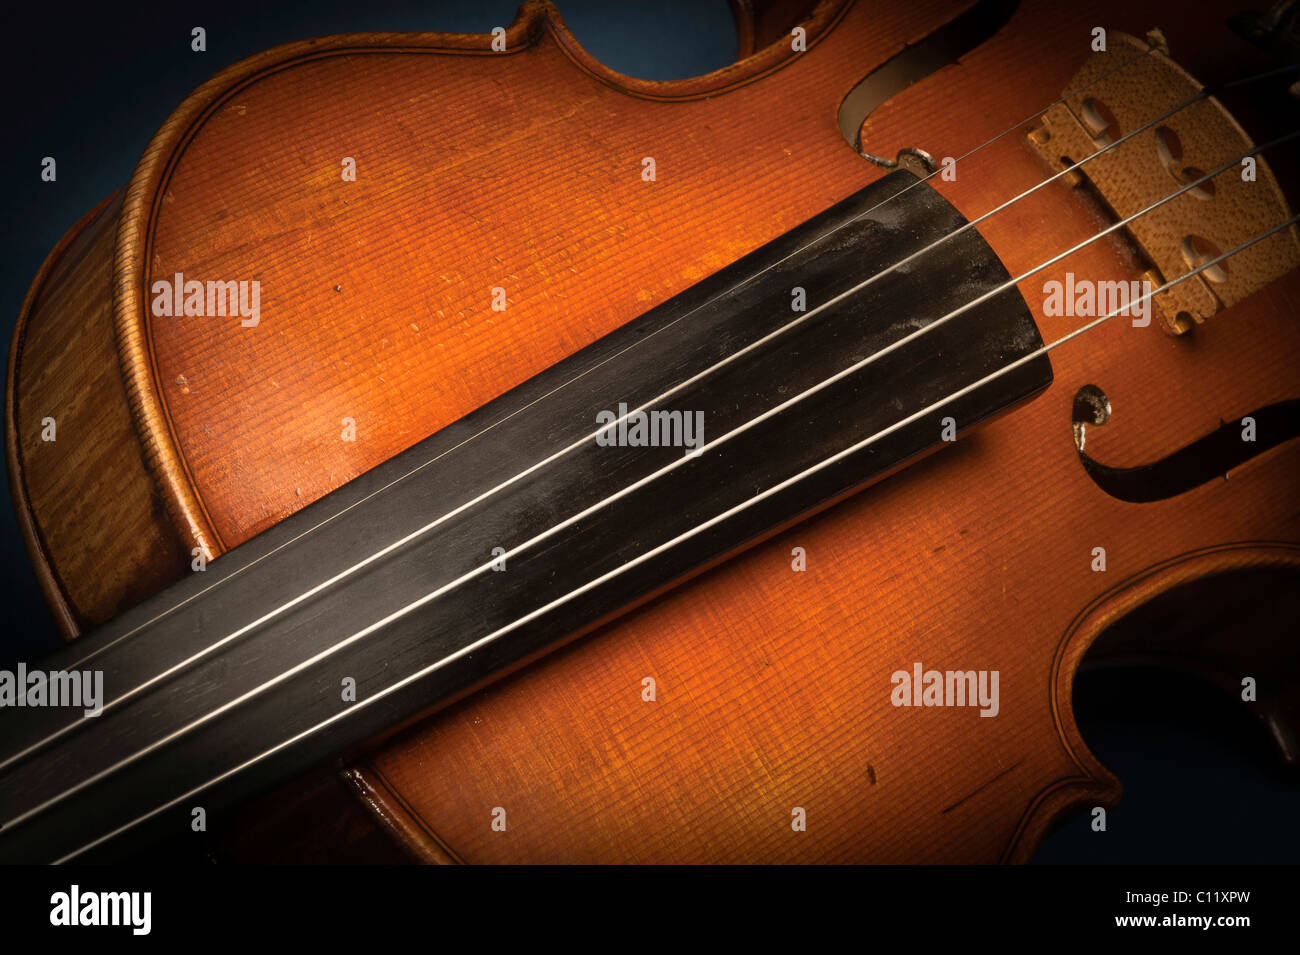 Fingerboard and body of a violin, violin Stock Photo